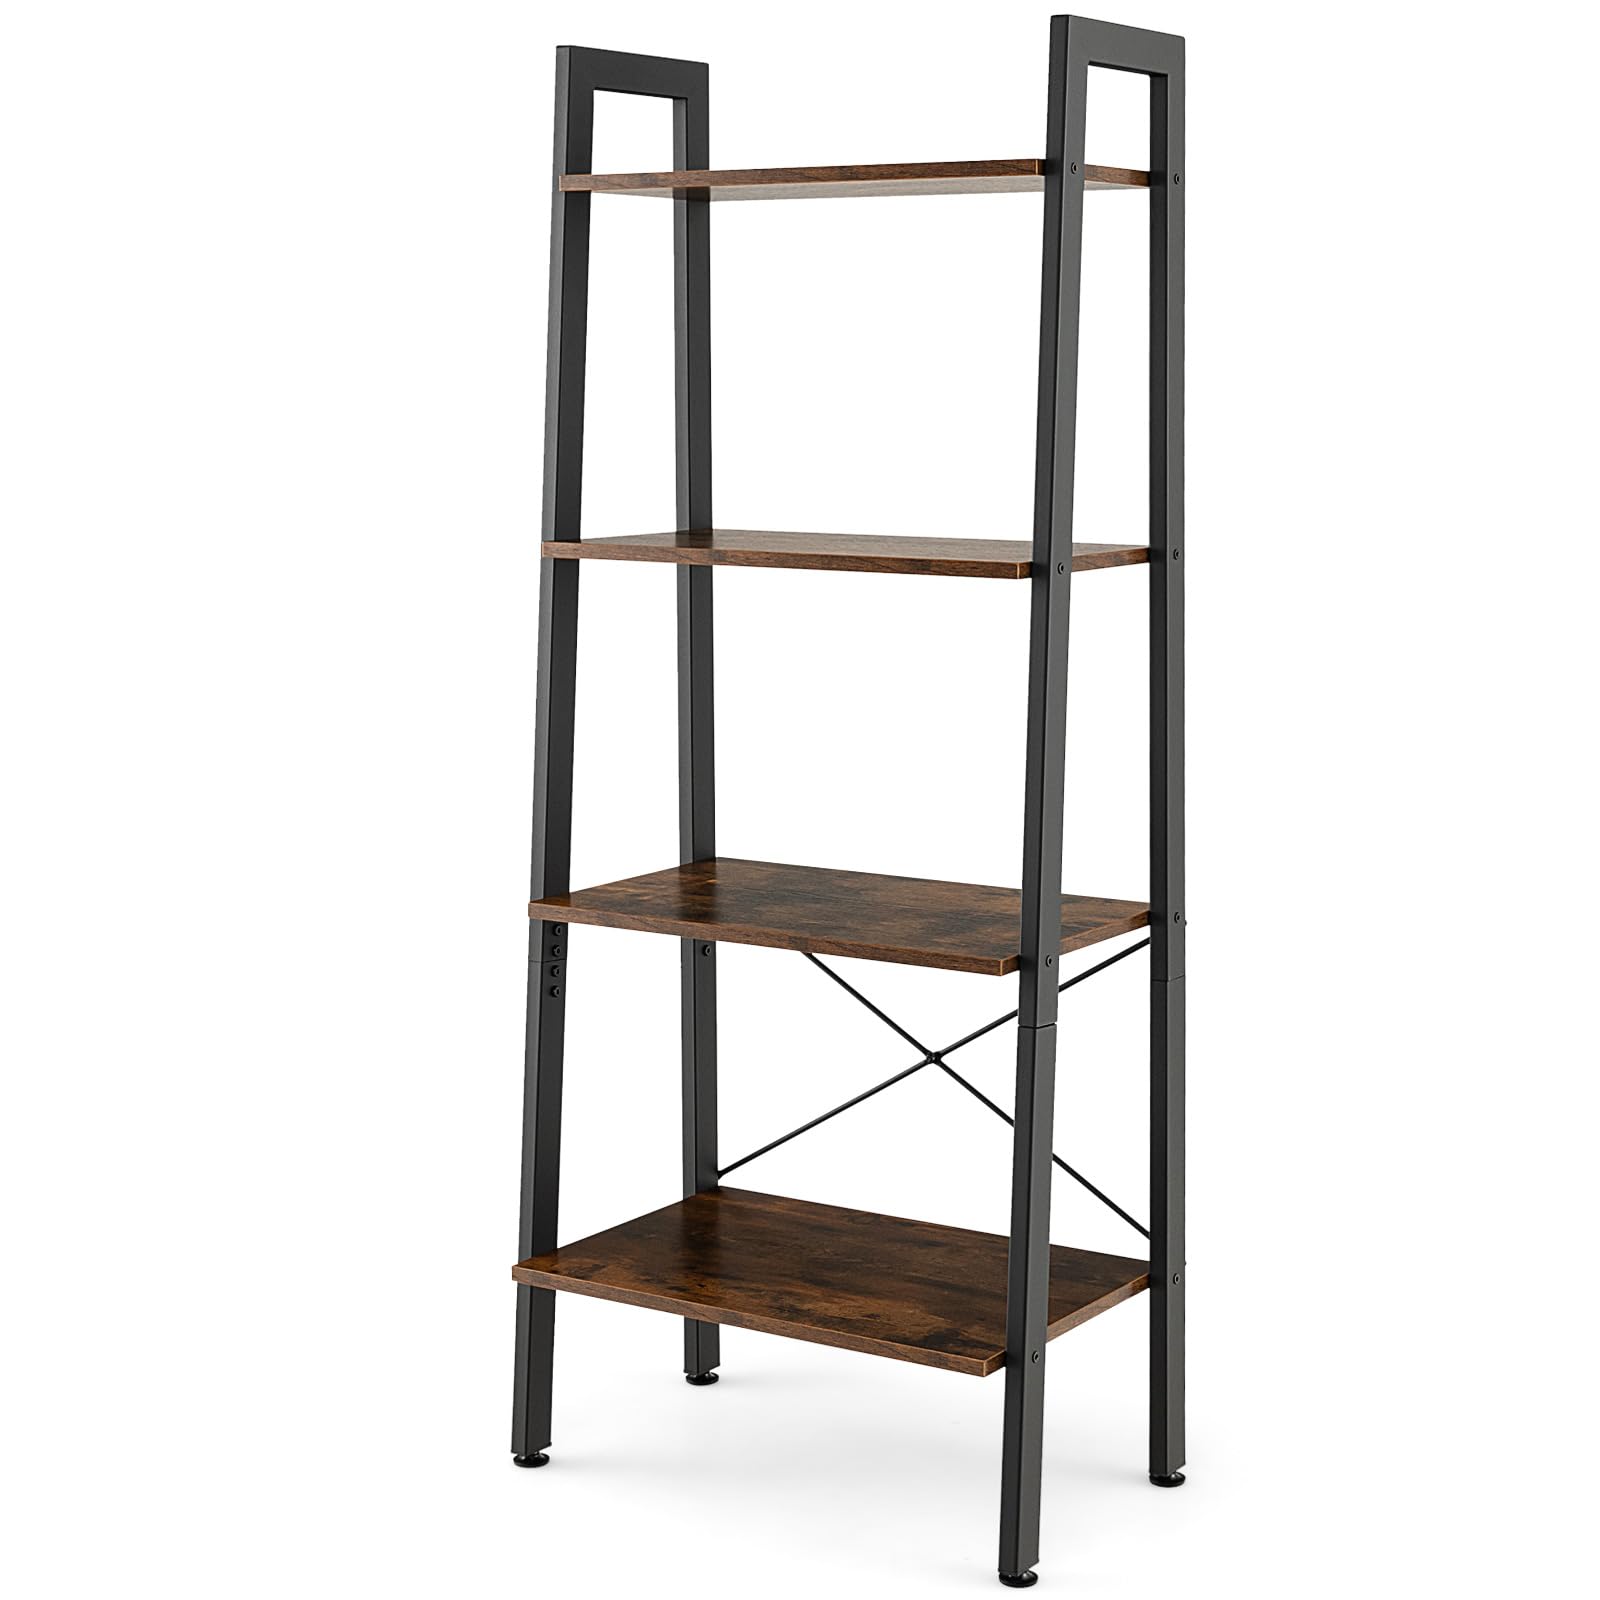 Giantex Industrial 4-Tier Bookshelf, Ladder Bookshelf with Metal Frame, Anti-Tipping Kits